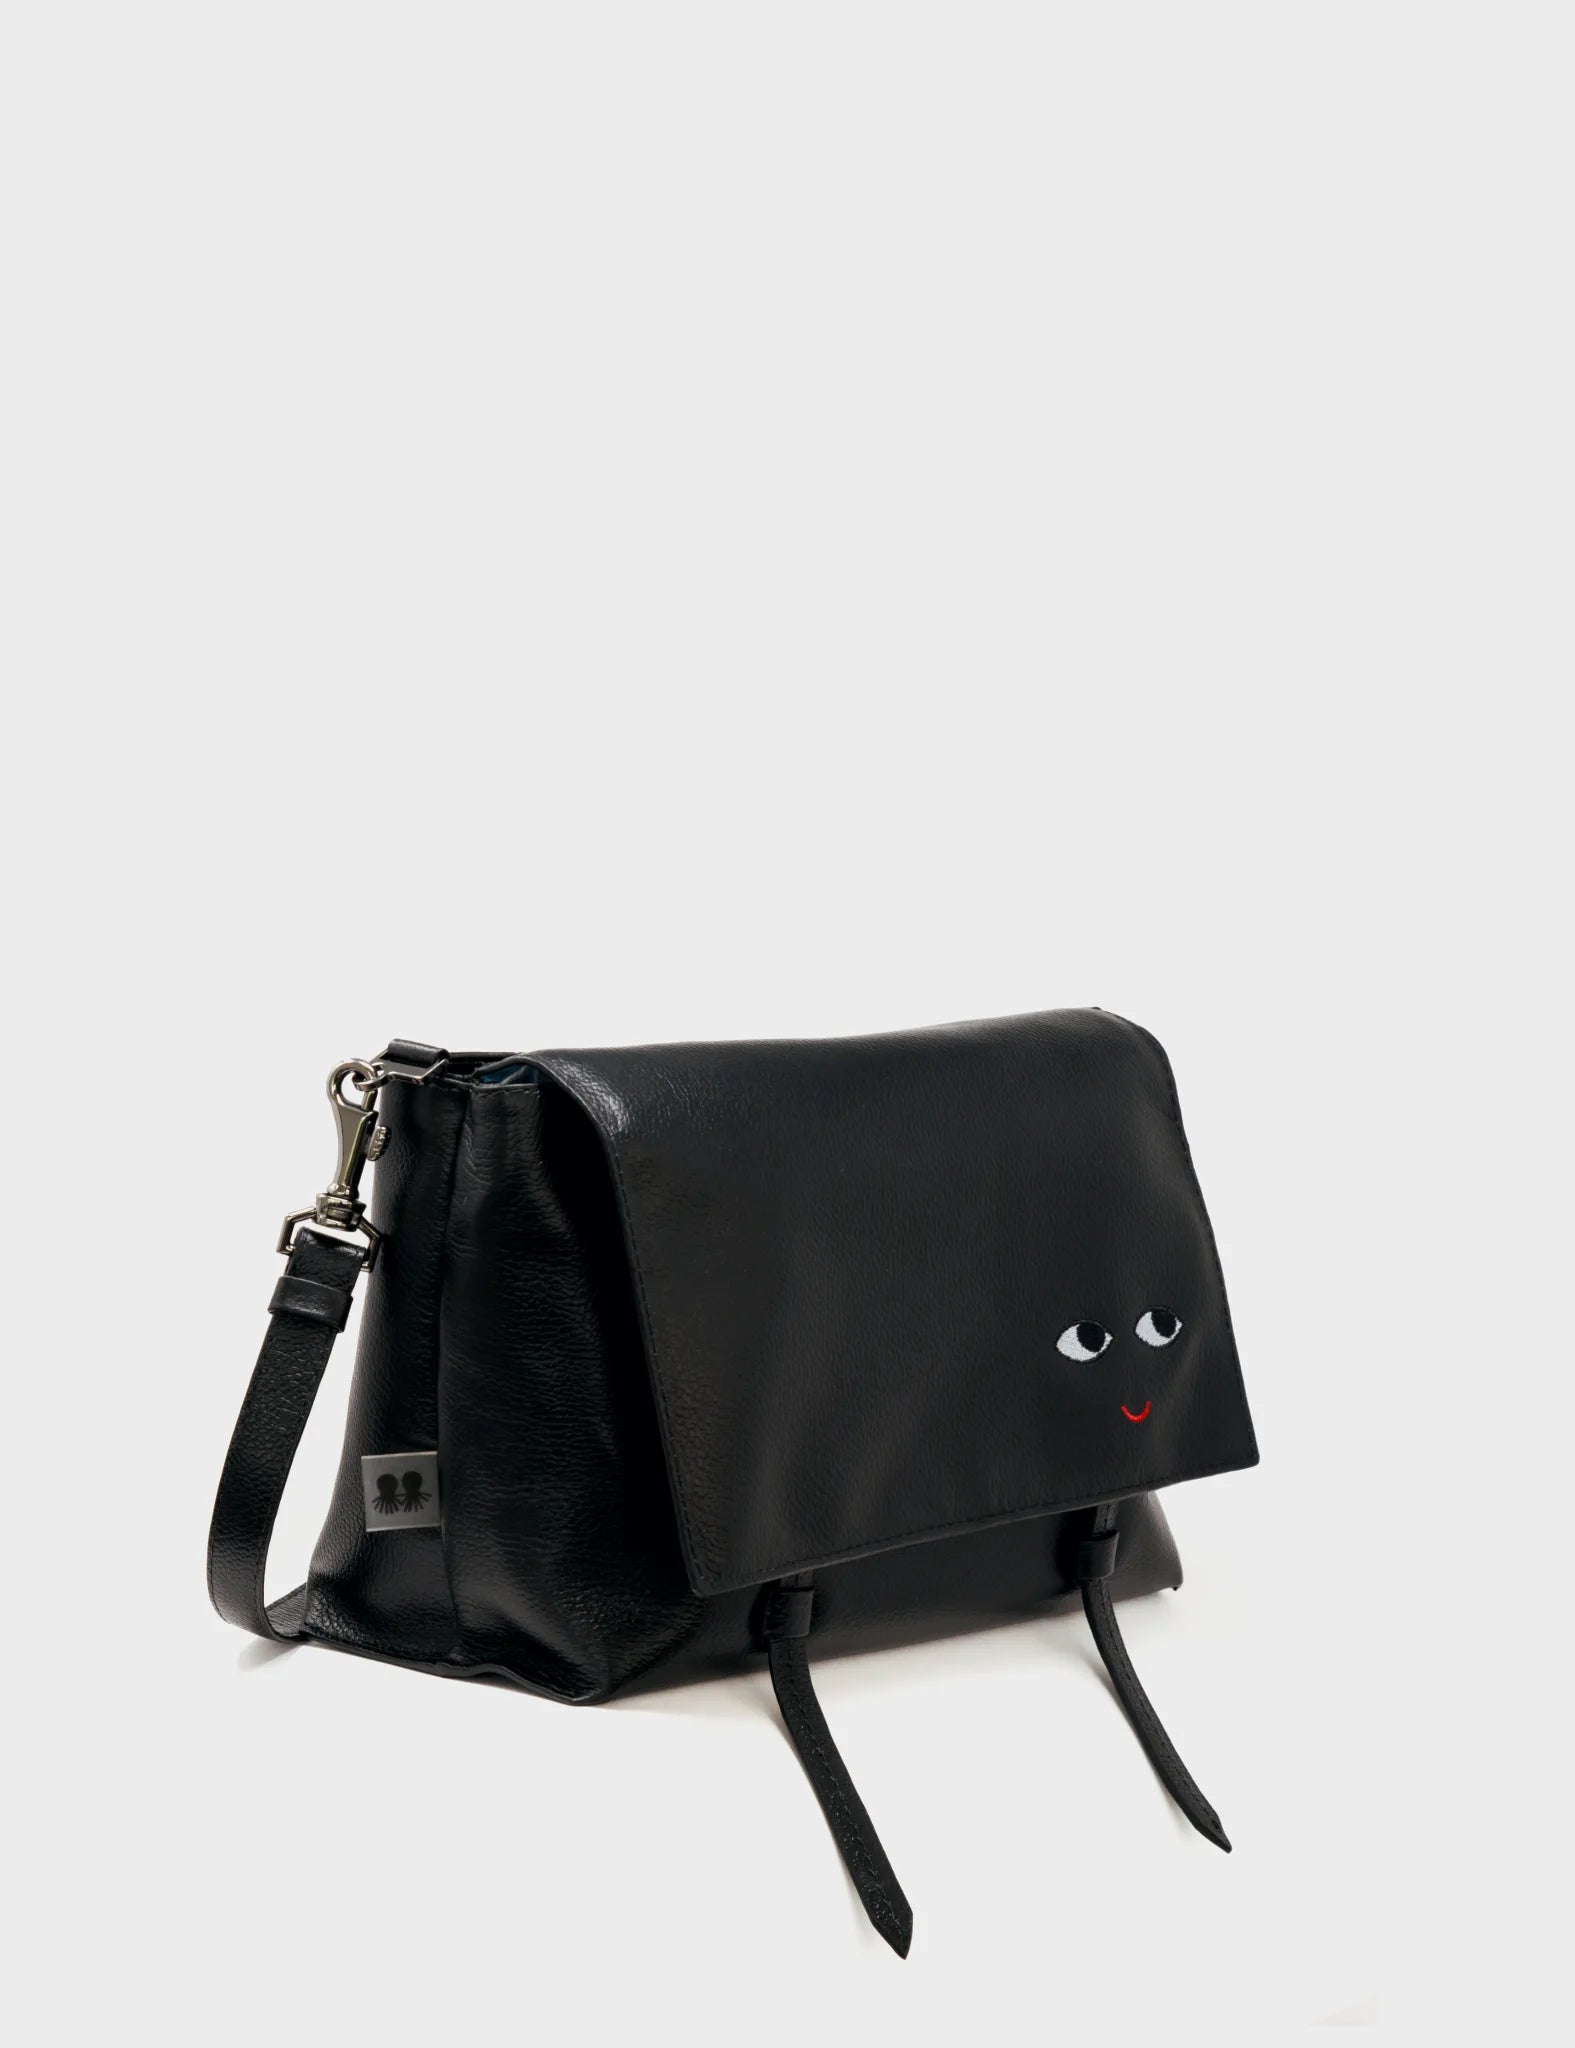 Reversible Small Messenger Bag Black Leather - Utopian Landscape - side b 